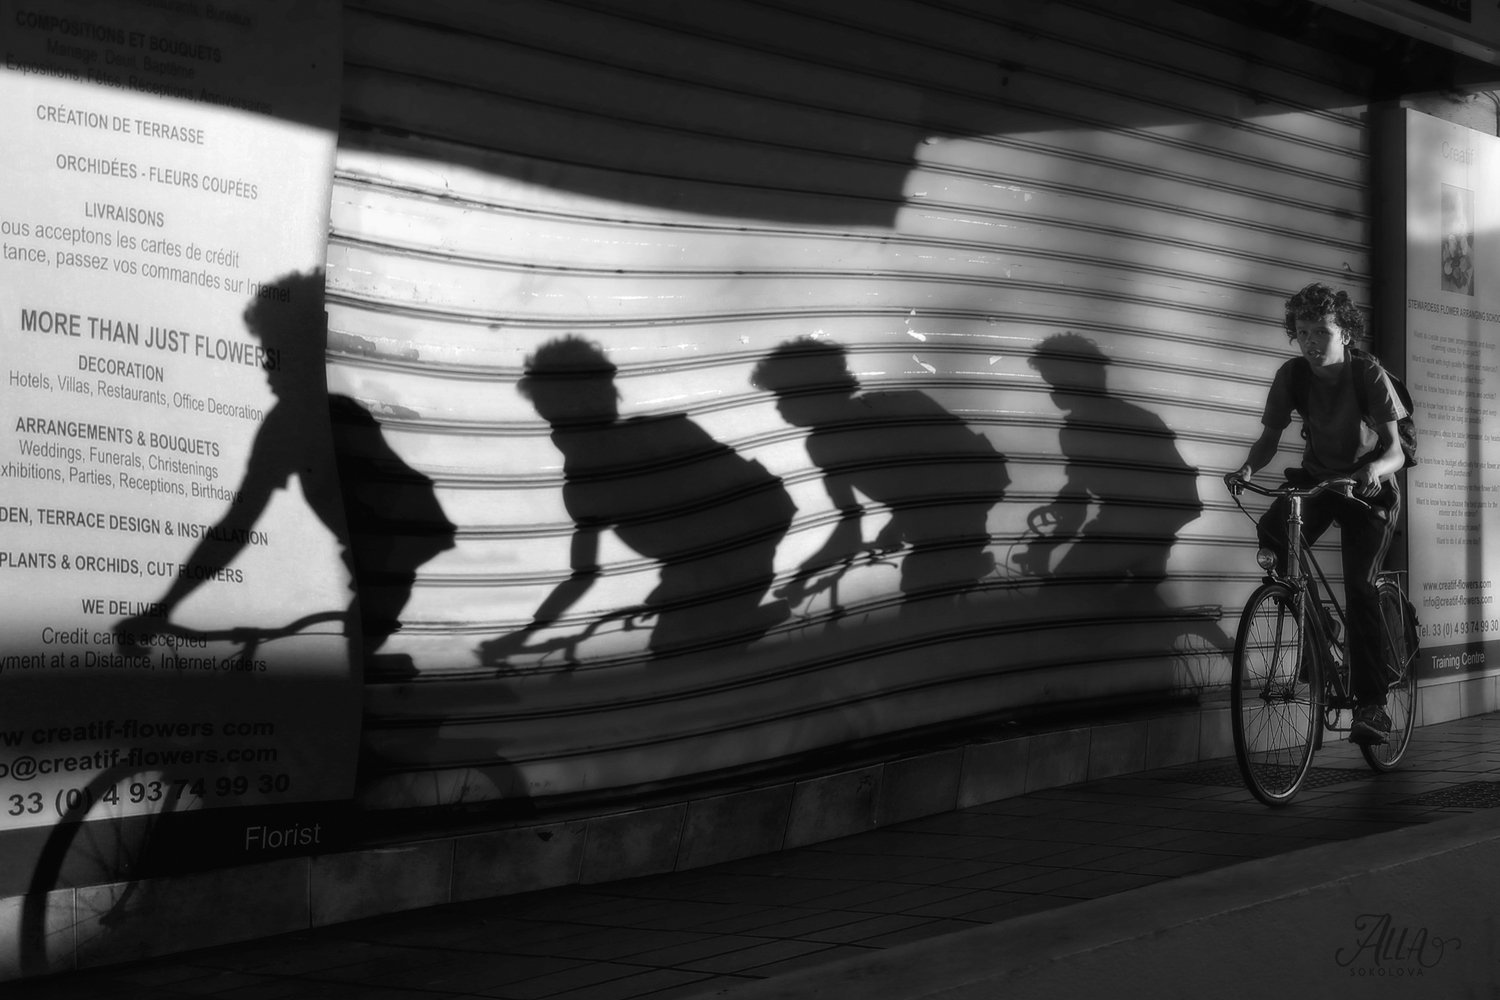 велосипед, гонка, коллаж, мальчик, погоня, реклама, следовать, стена, тень, ALLA SOKOLOVA